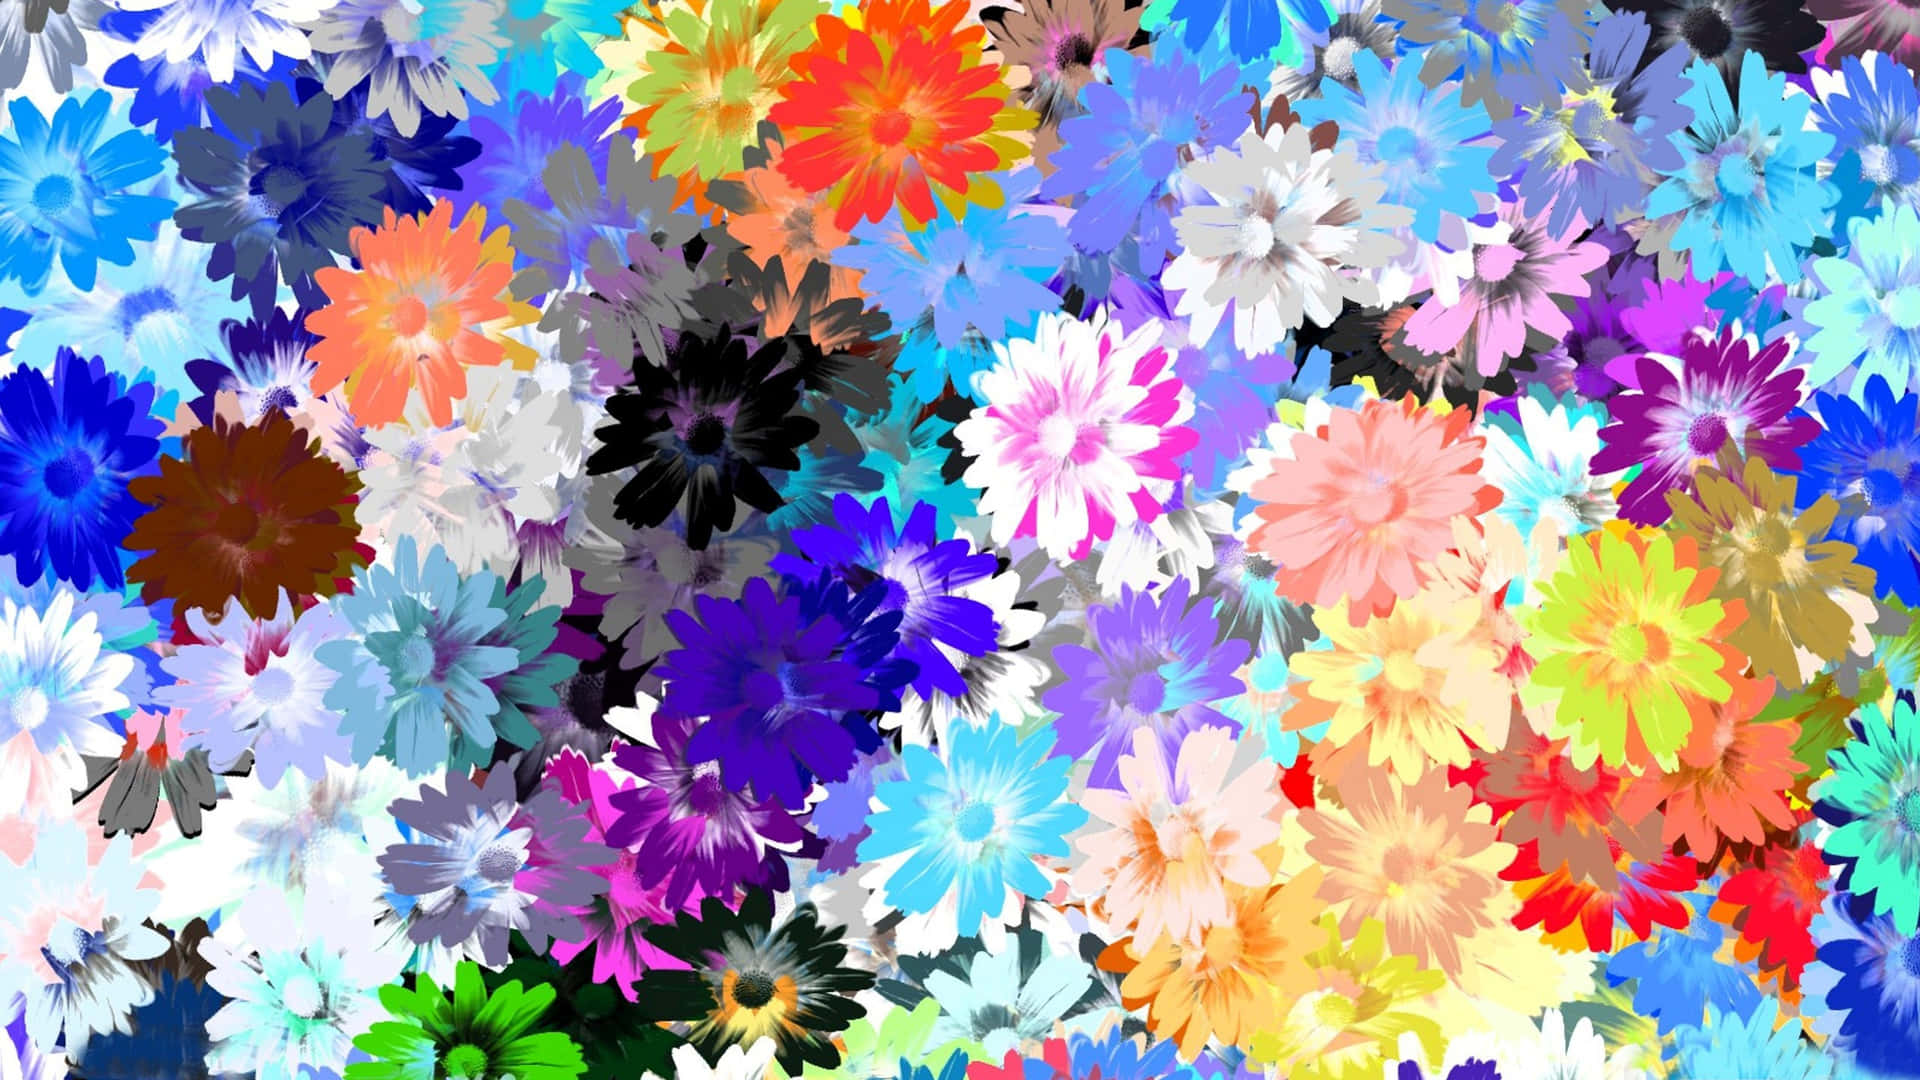 tumblr drawings patterns flowers